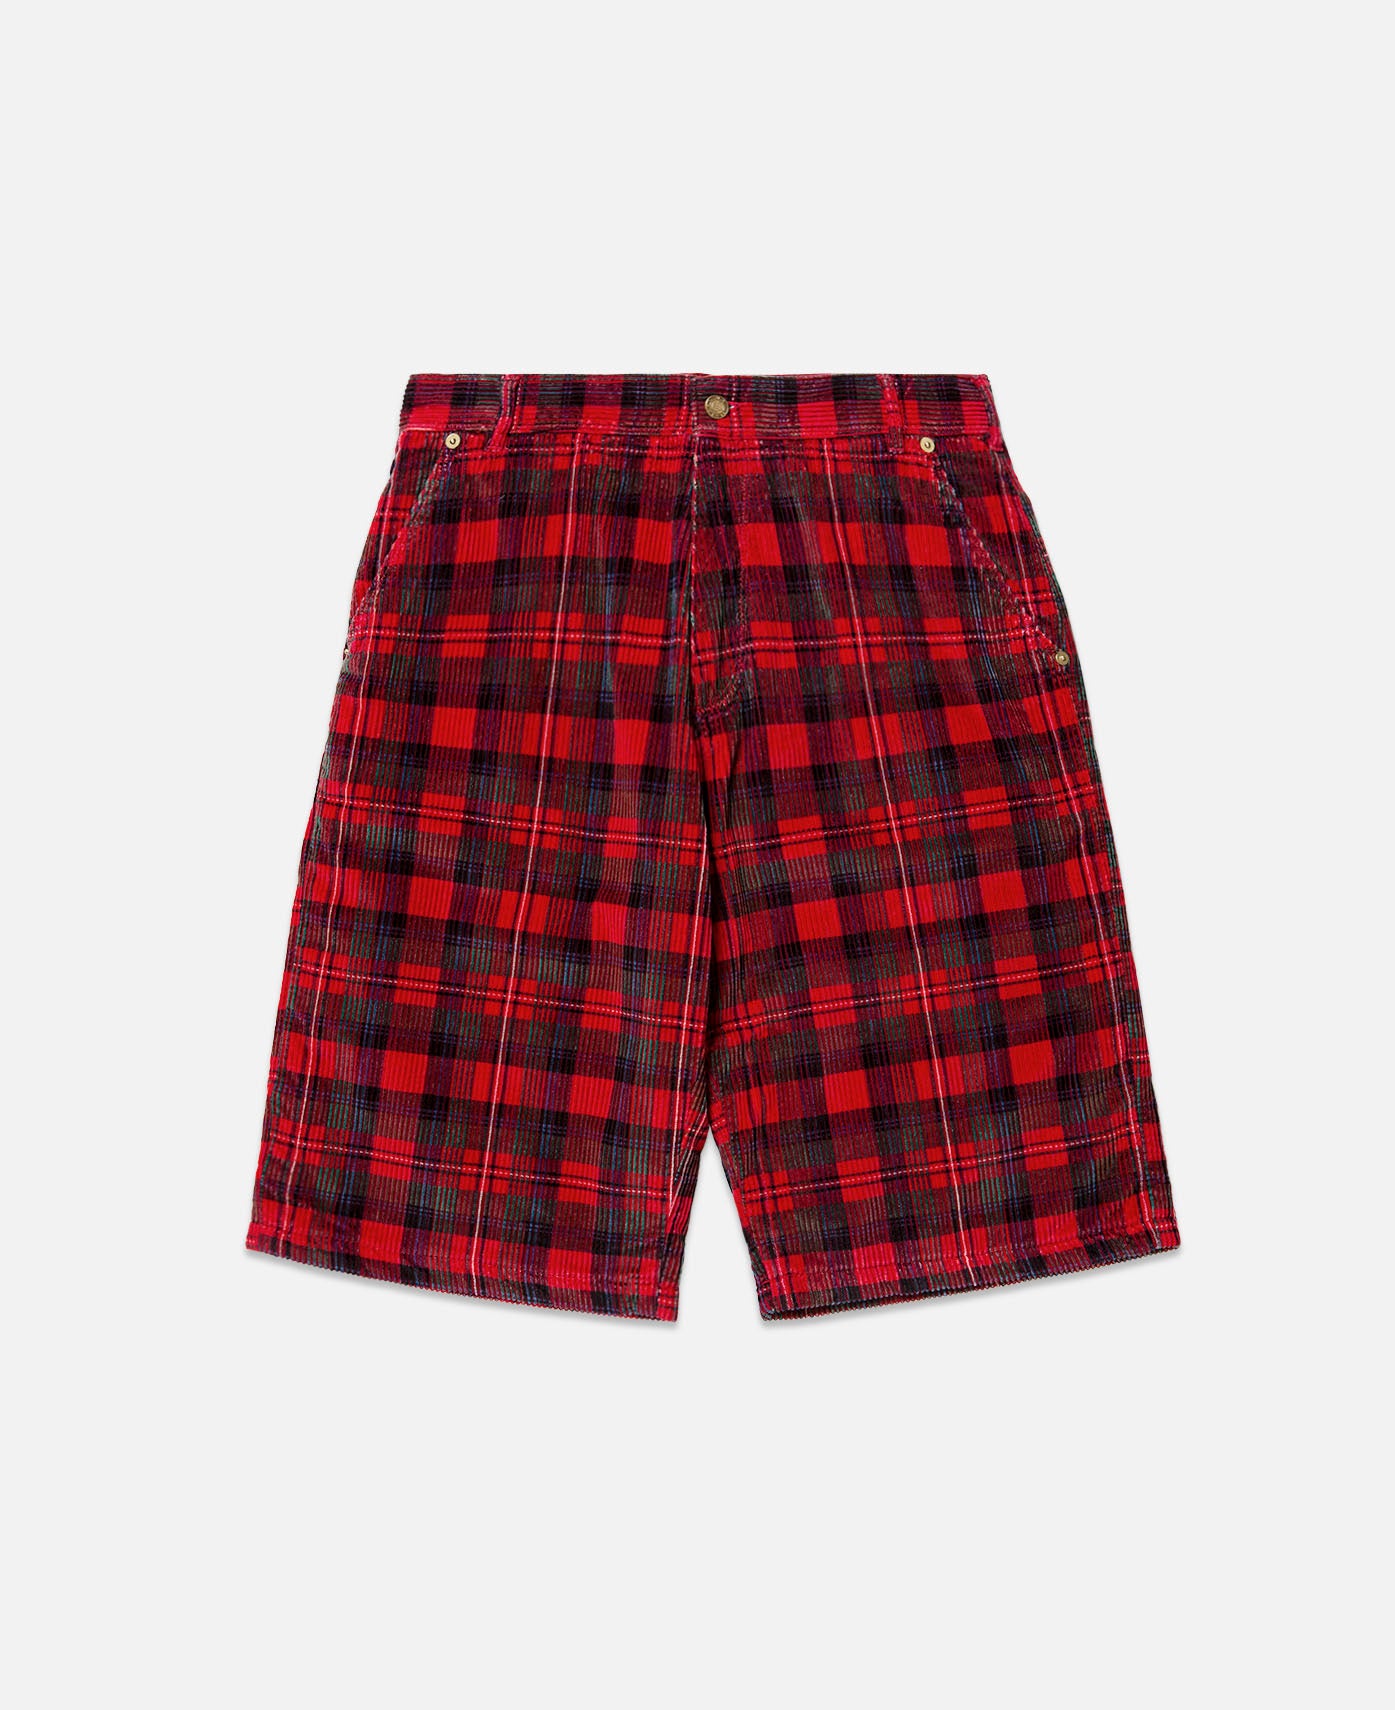 Unisex Plaid Corduroy Woven Shorts  (Red)